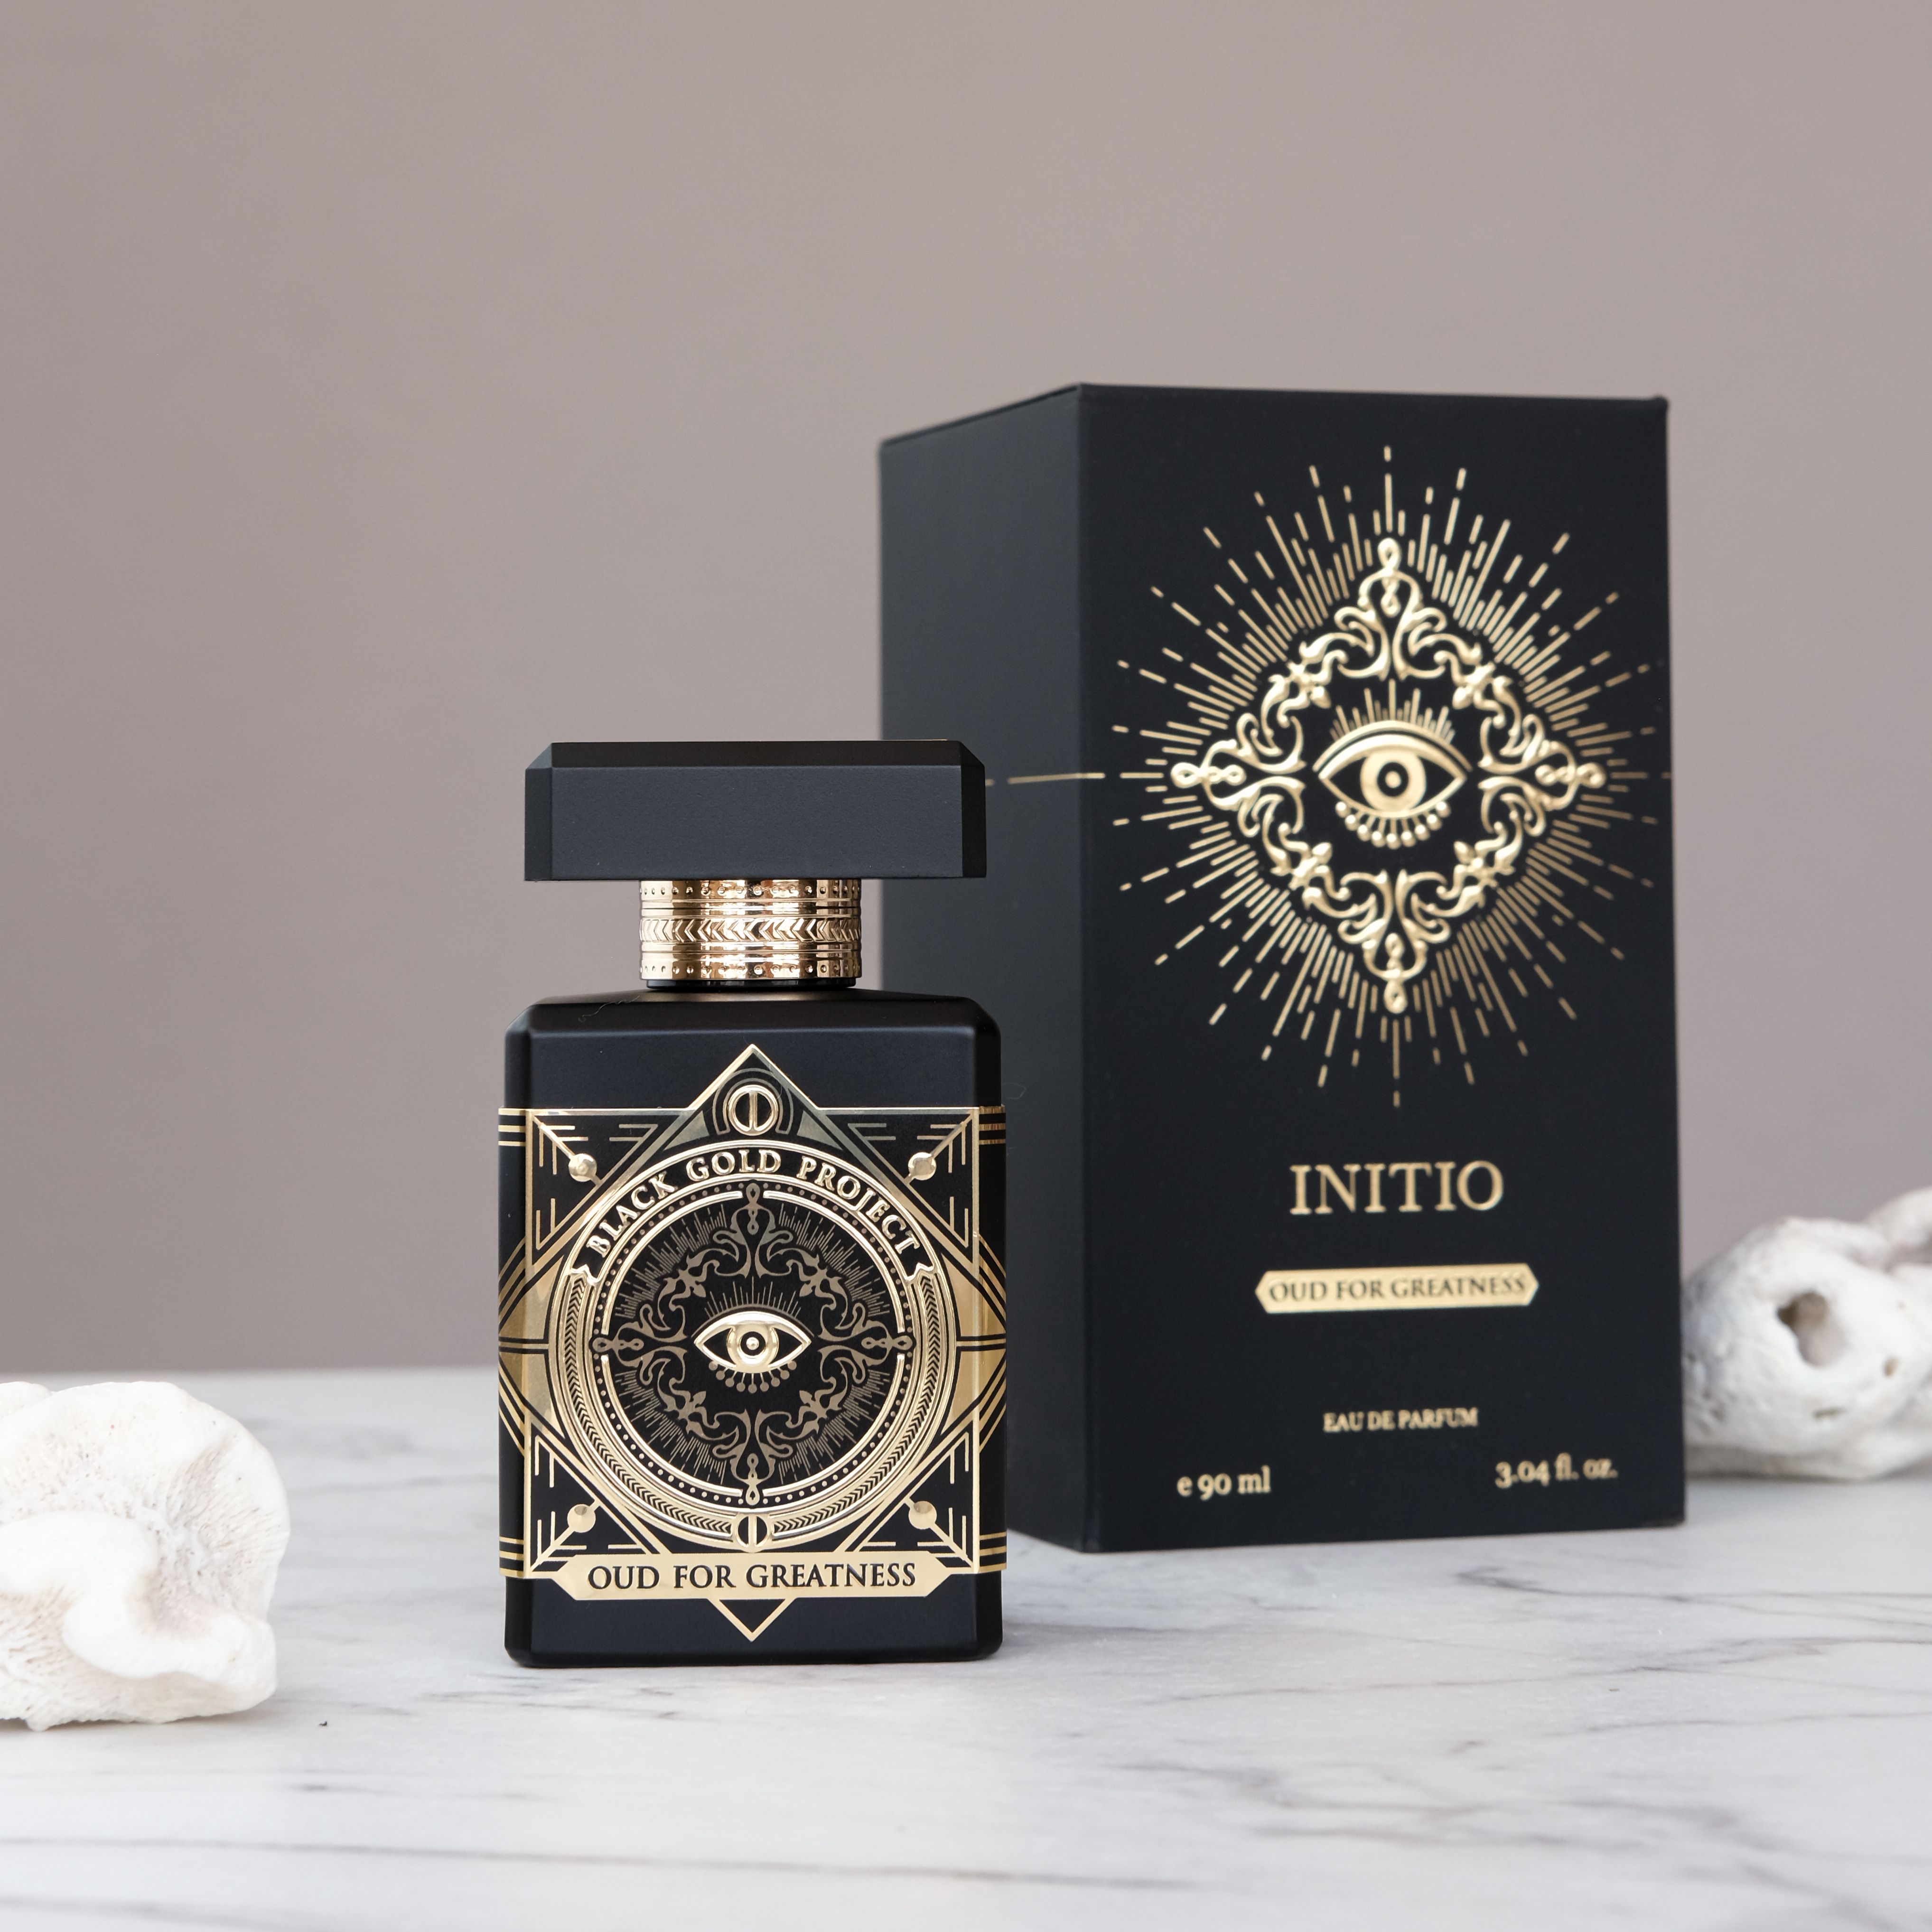 Initio parfums